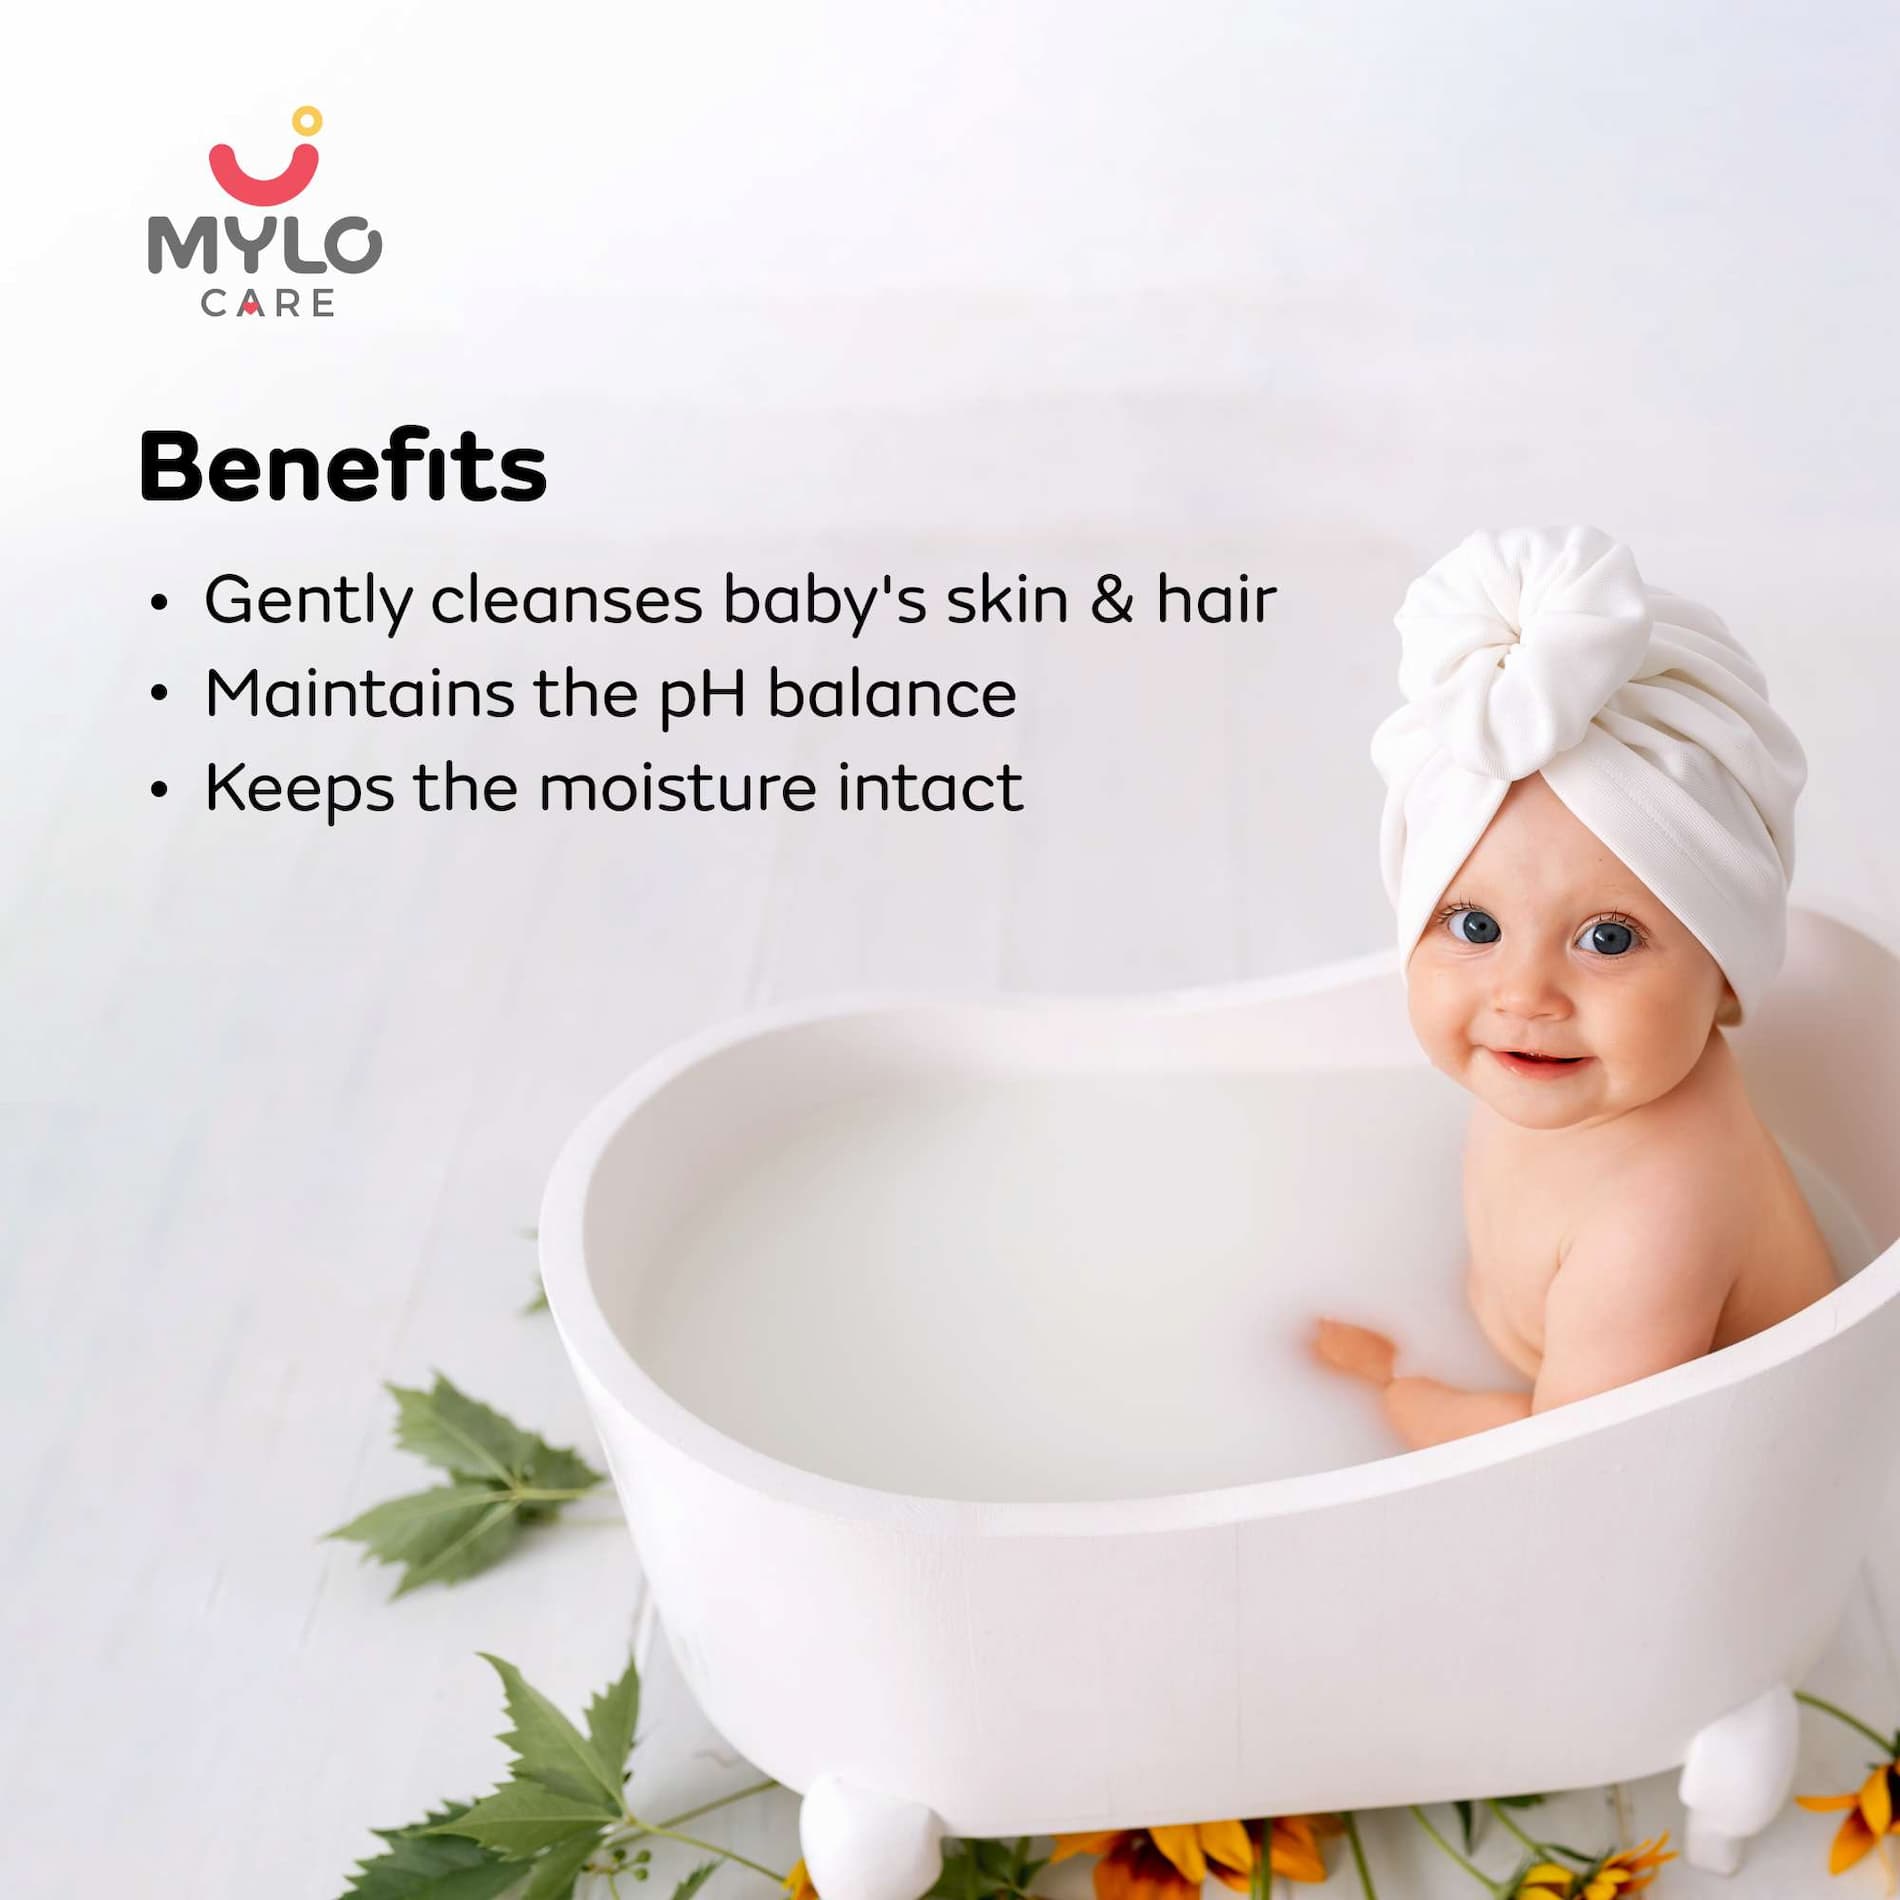 Mylo  Body Wash & Shampoo (200ml)